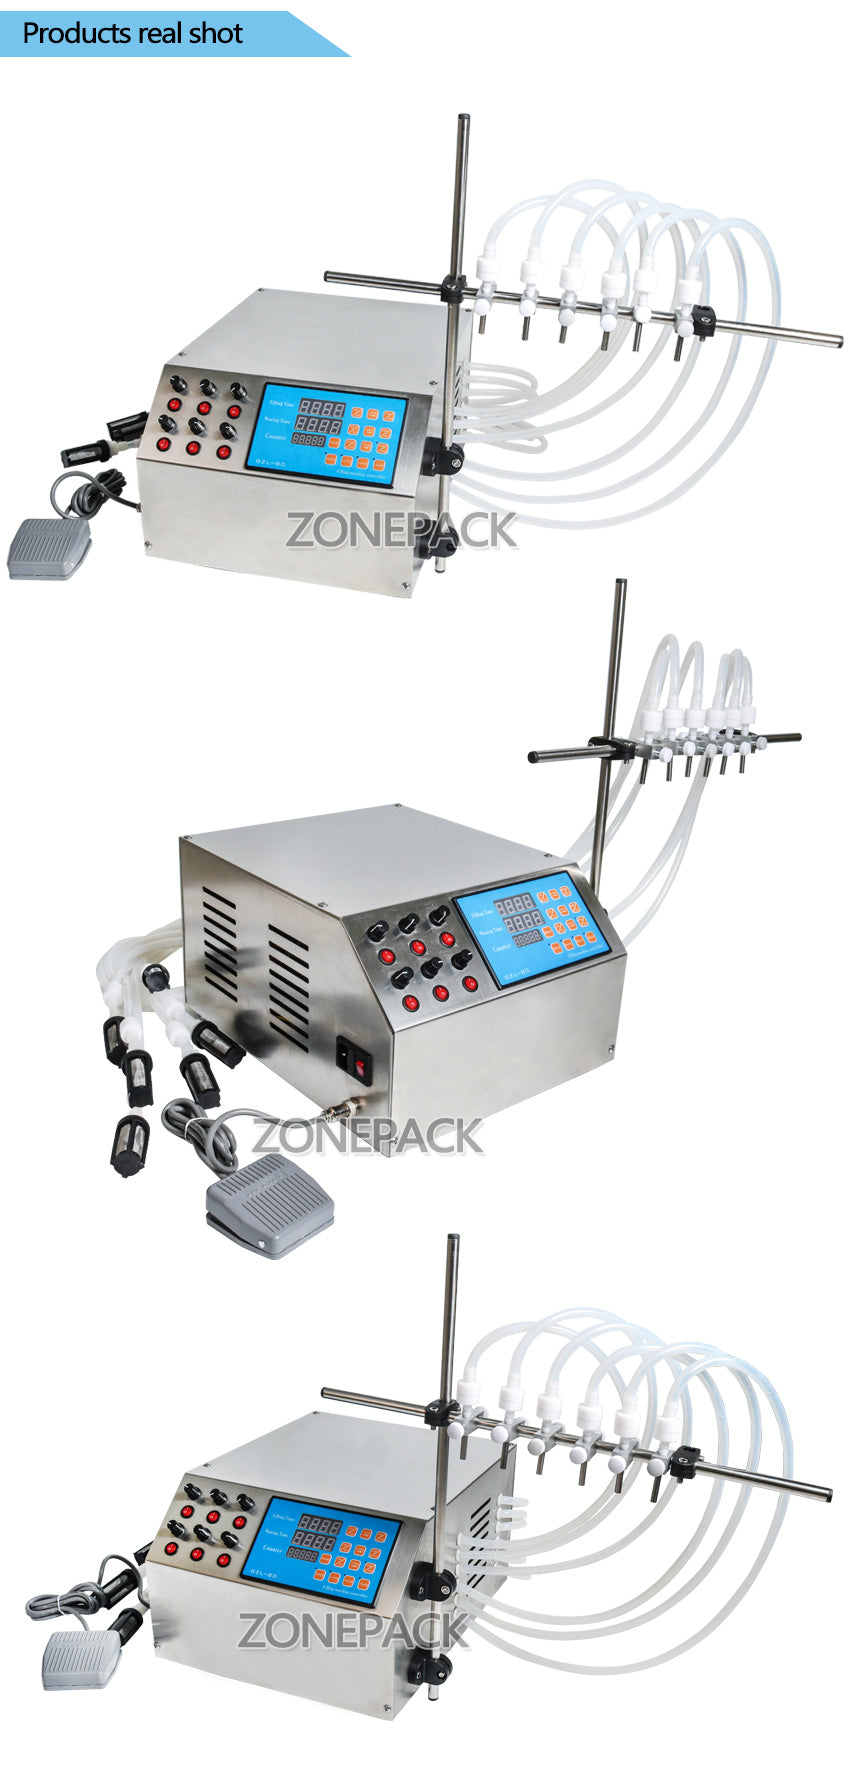 ZONEPACK Electric Digital Control Pump Liquid Filling Machine 3-4000ml for Liquid Perfume Water Juice Essential Oil with 6 Heads